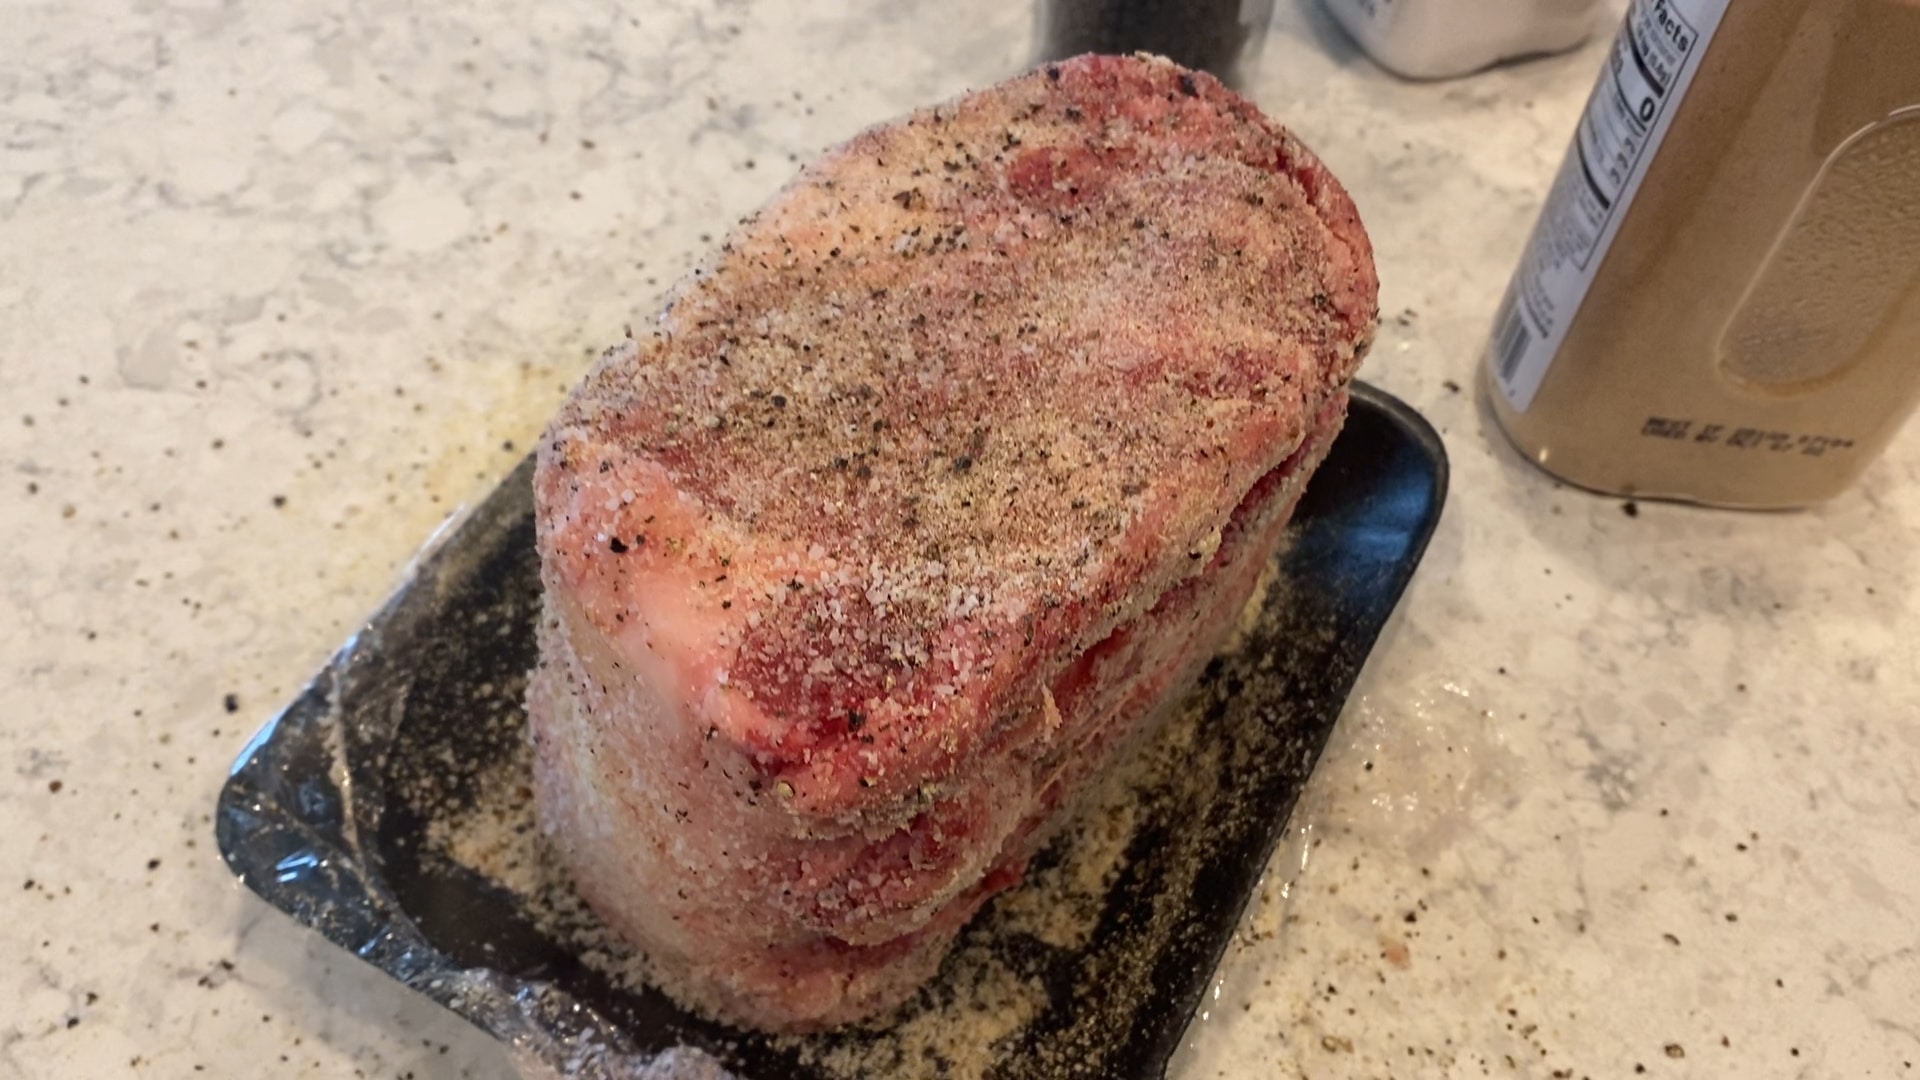 seasoned prime rib roast on a counter